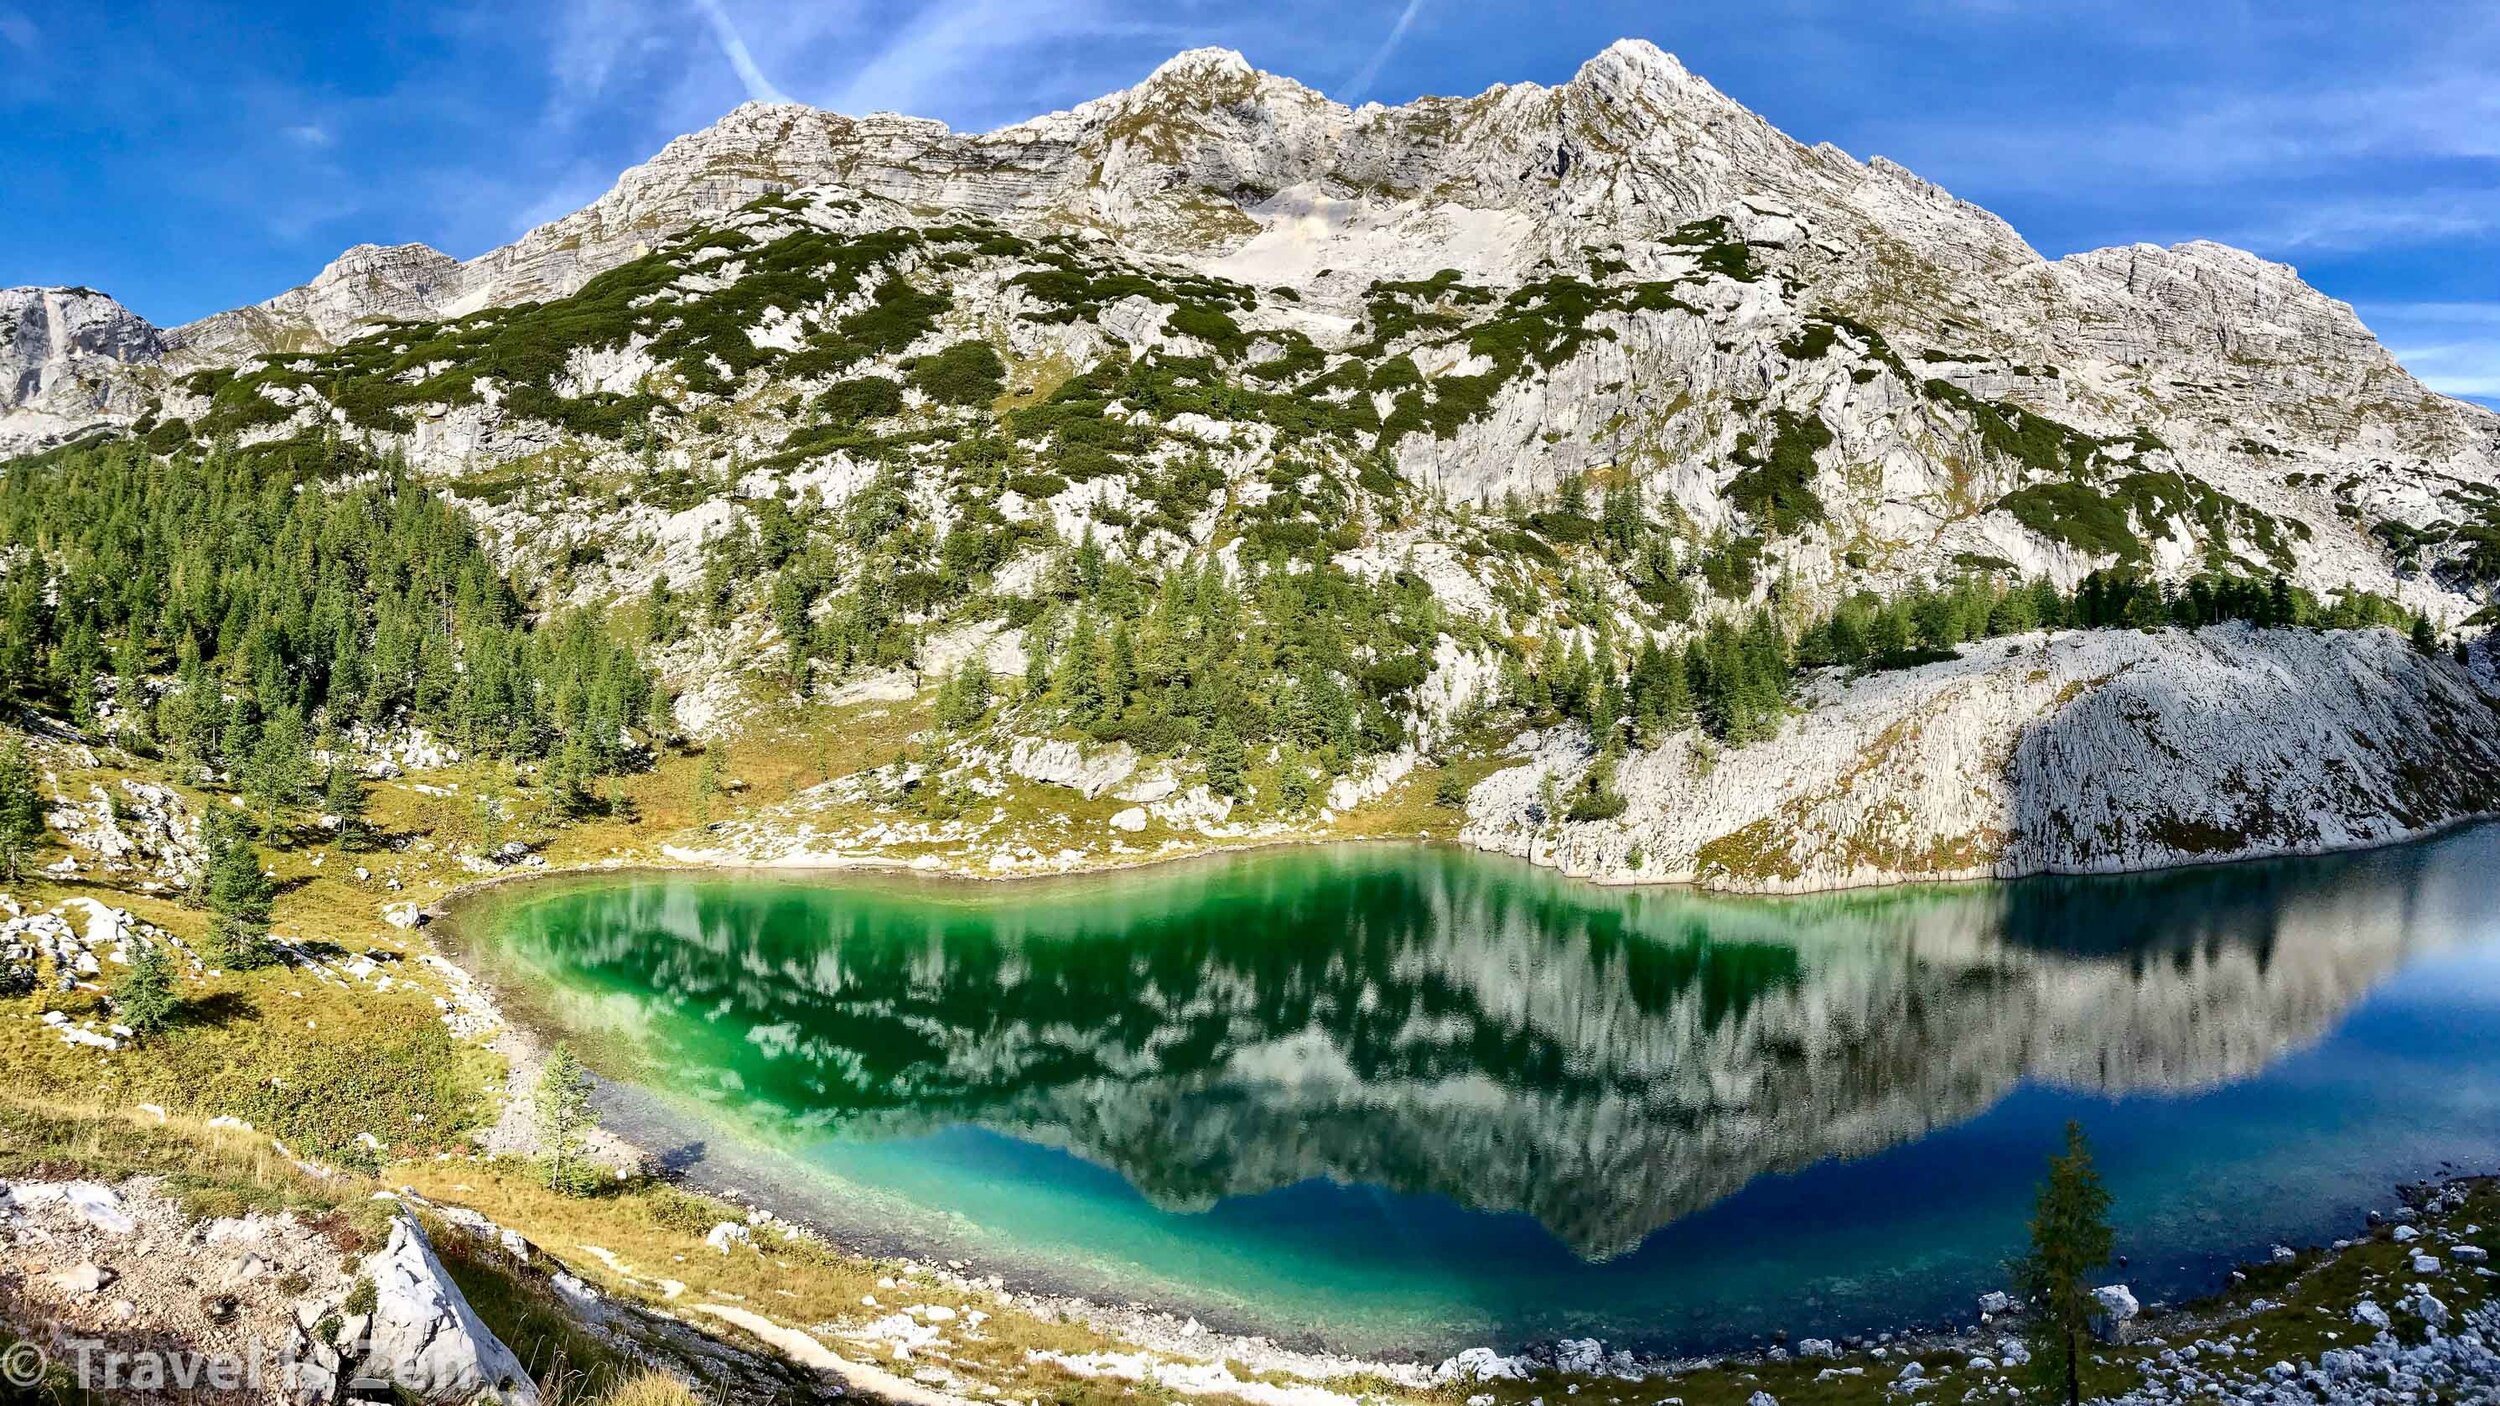 Jezero v Ledvicah, Slovenia